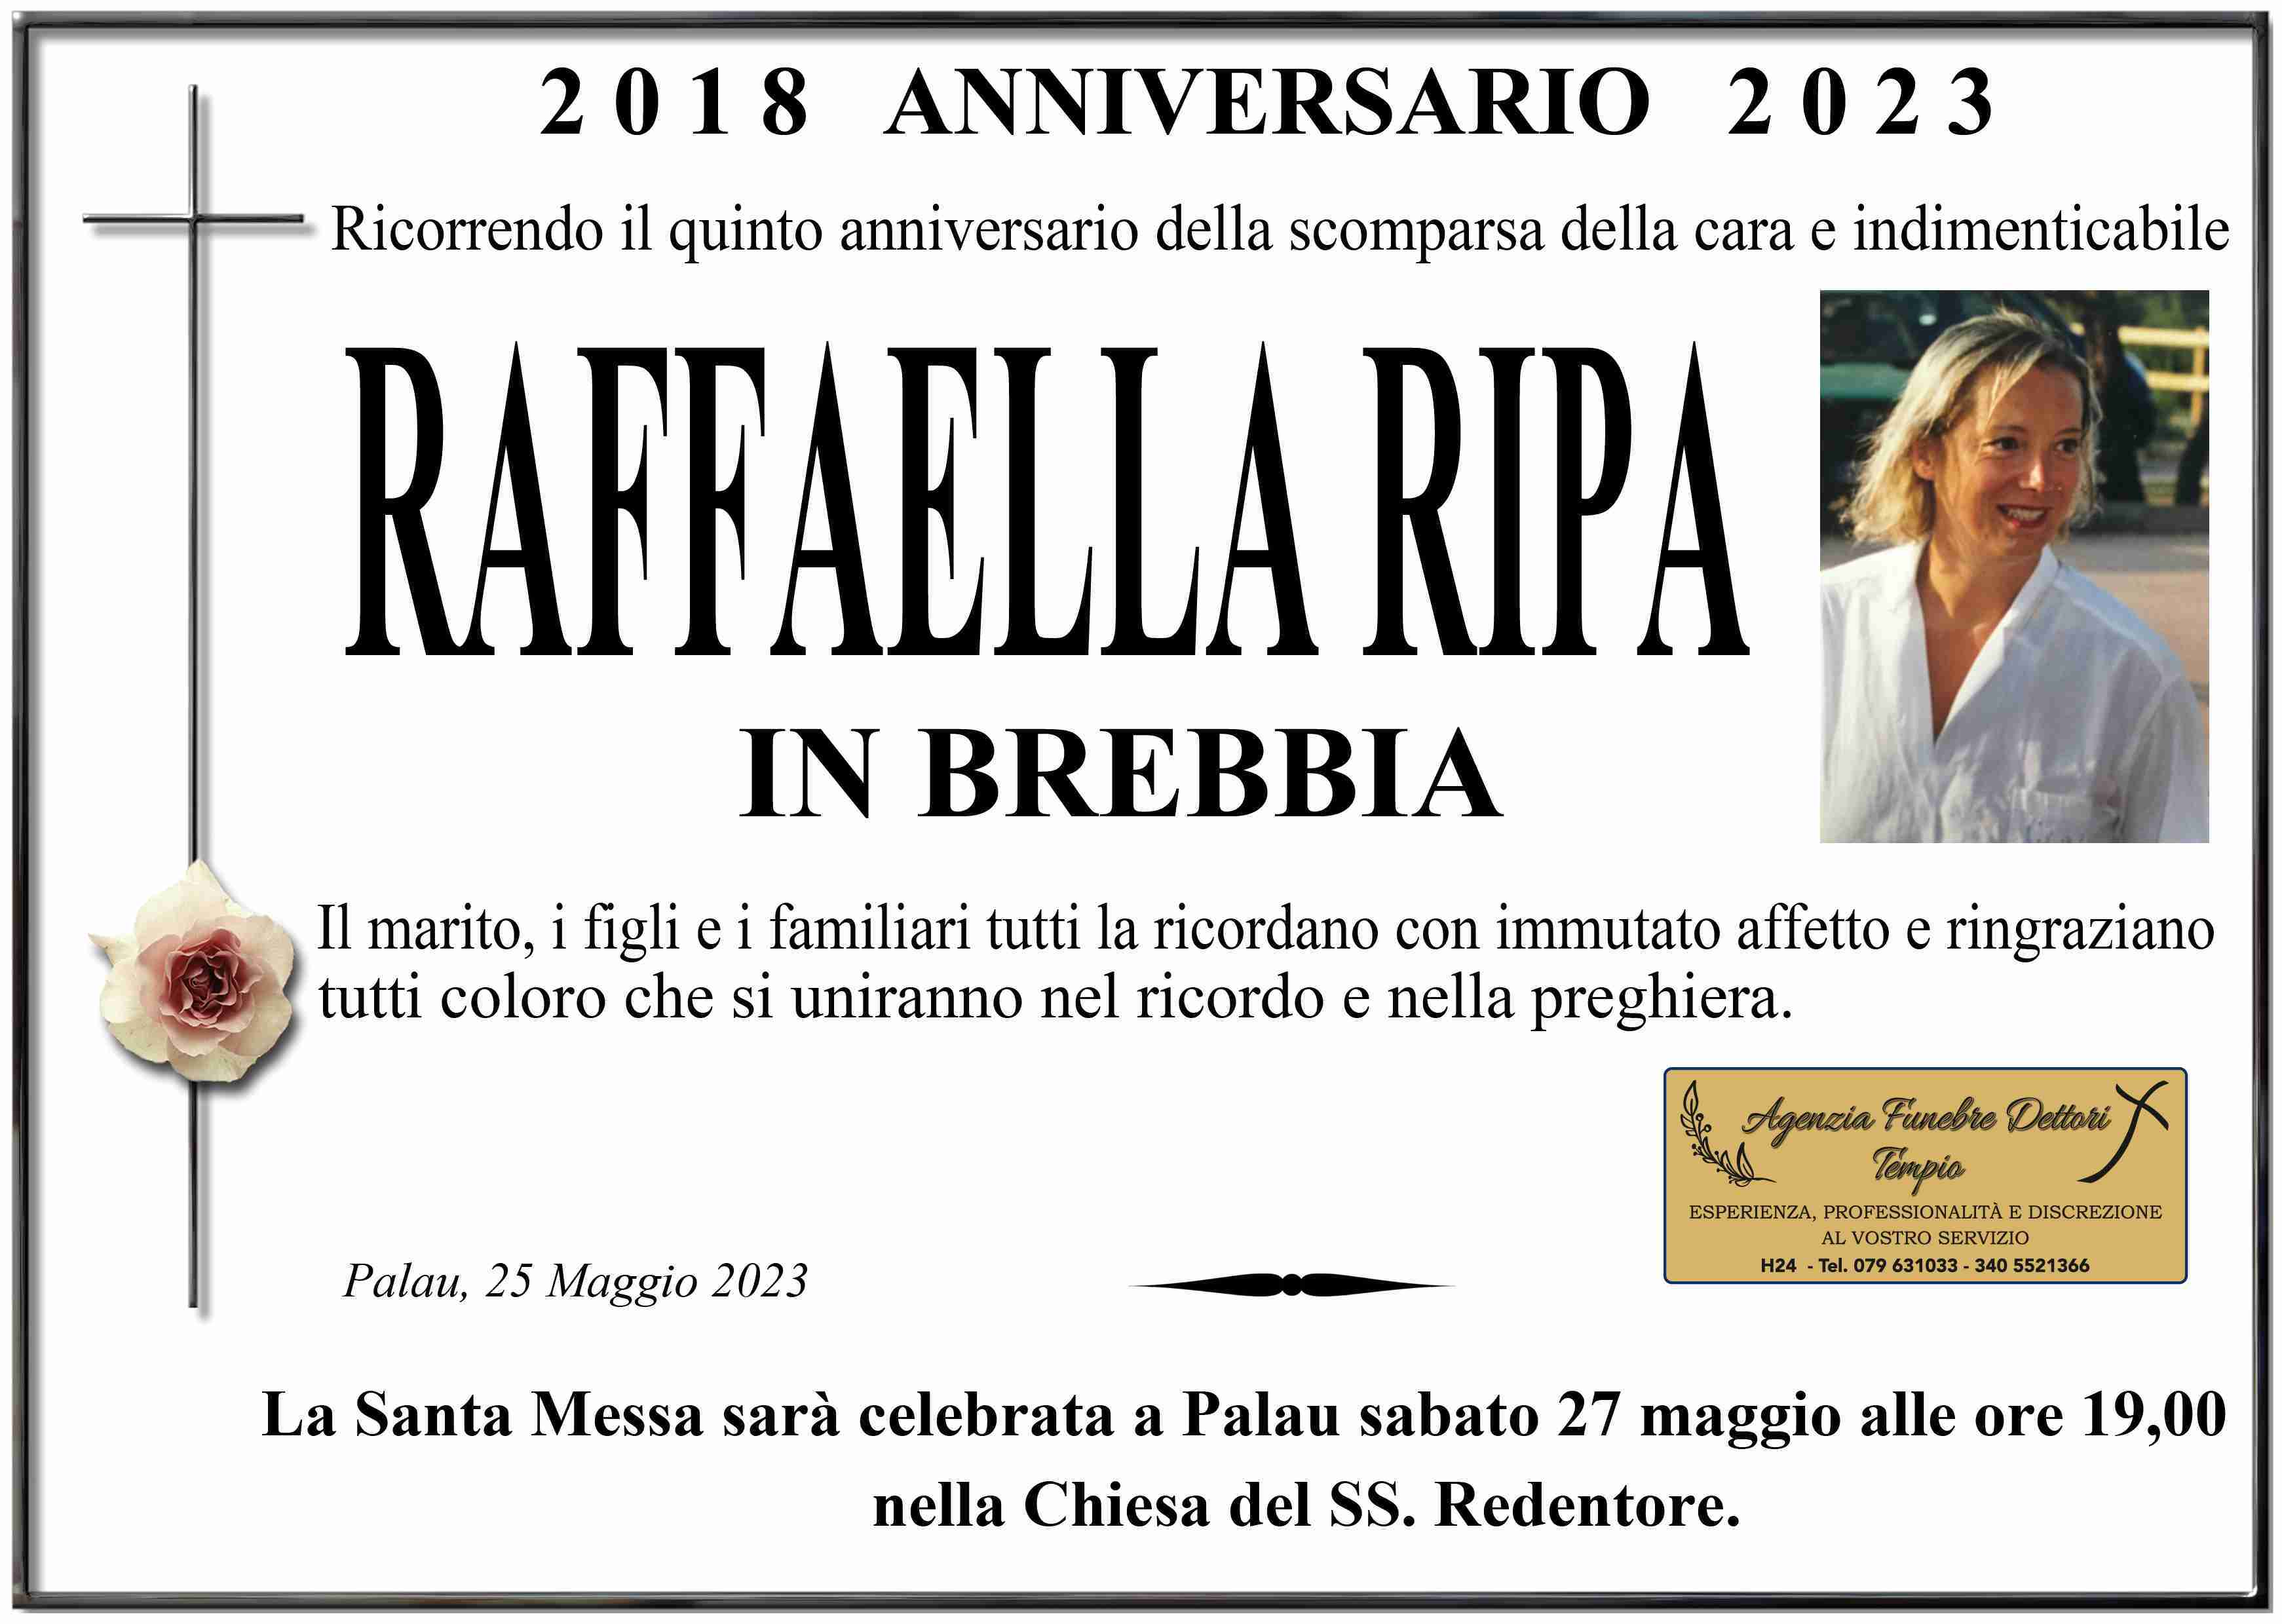 Raffaella Ripa